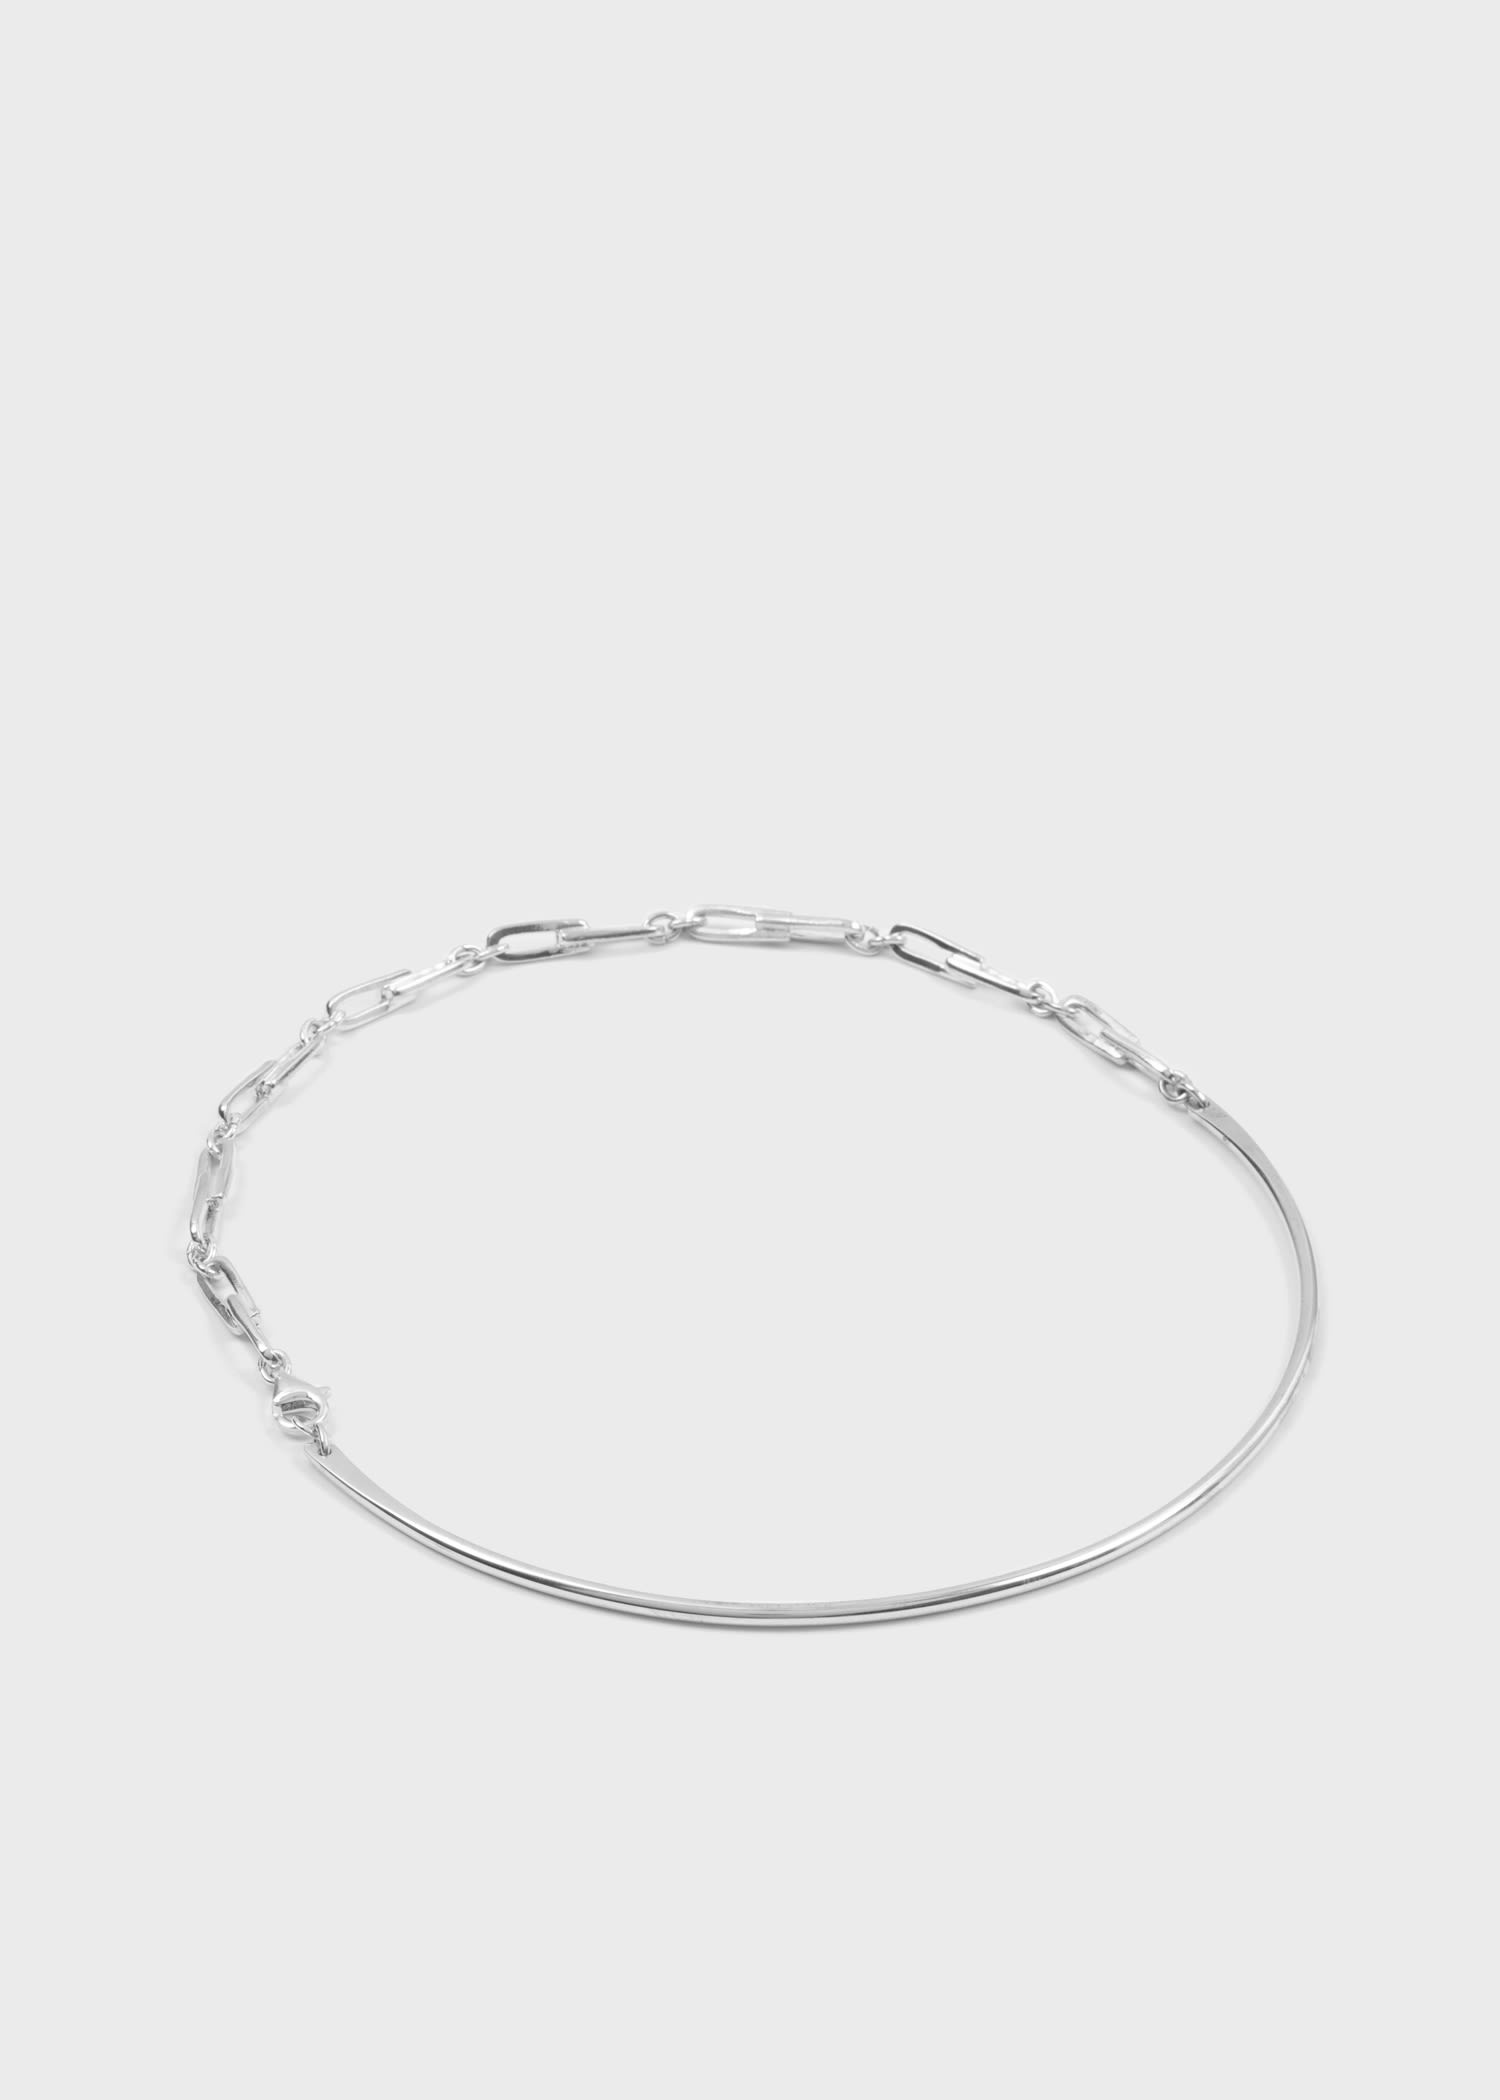 'Frank' Silver Choker Necklace - 5